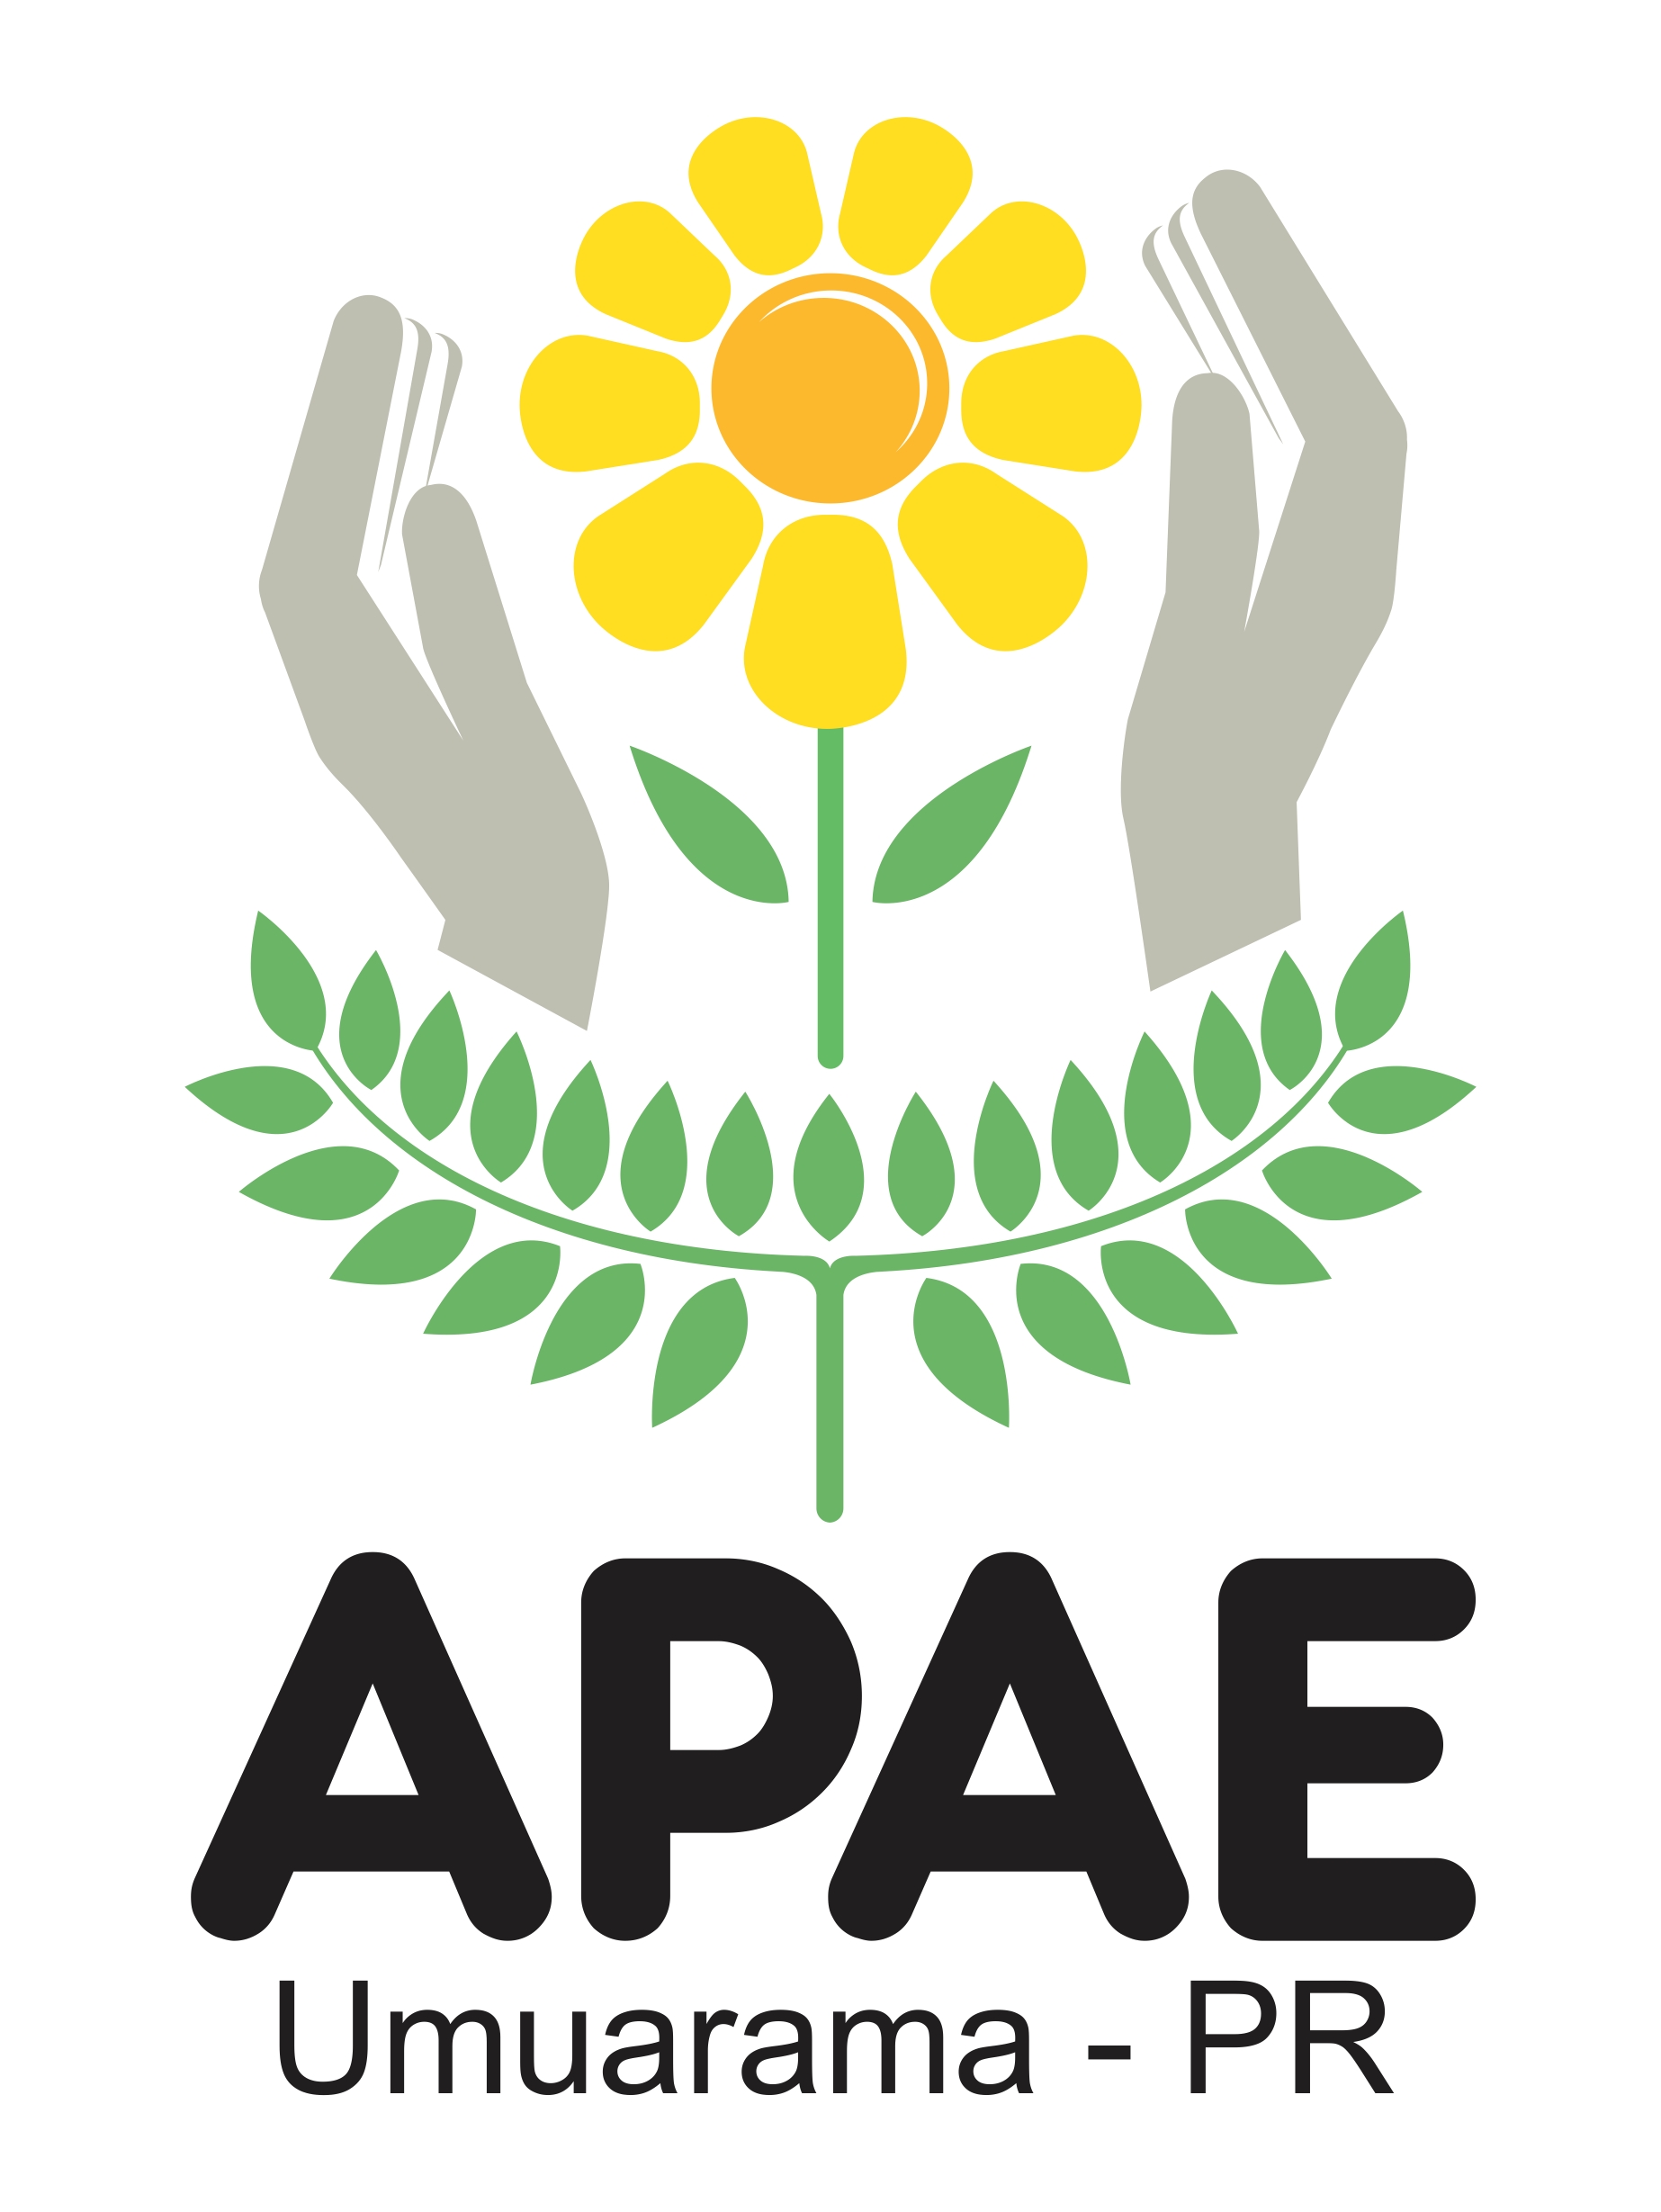 APAE SALVADOR Logo photo - 1